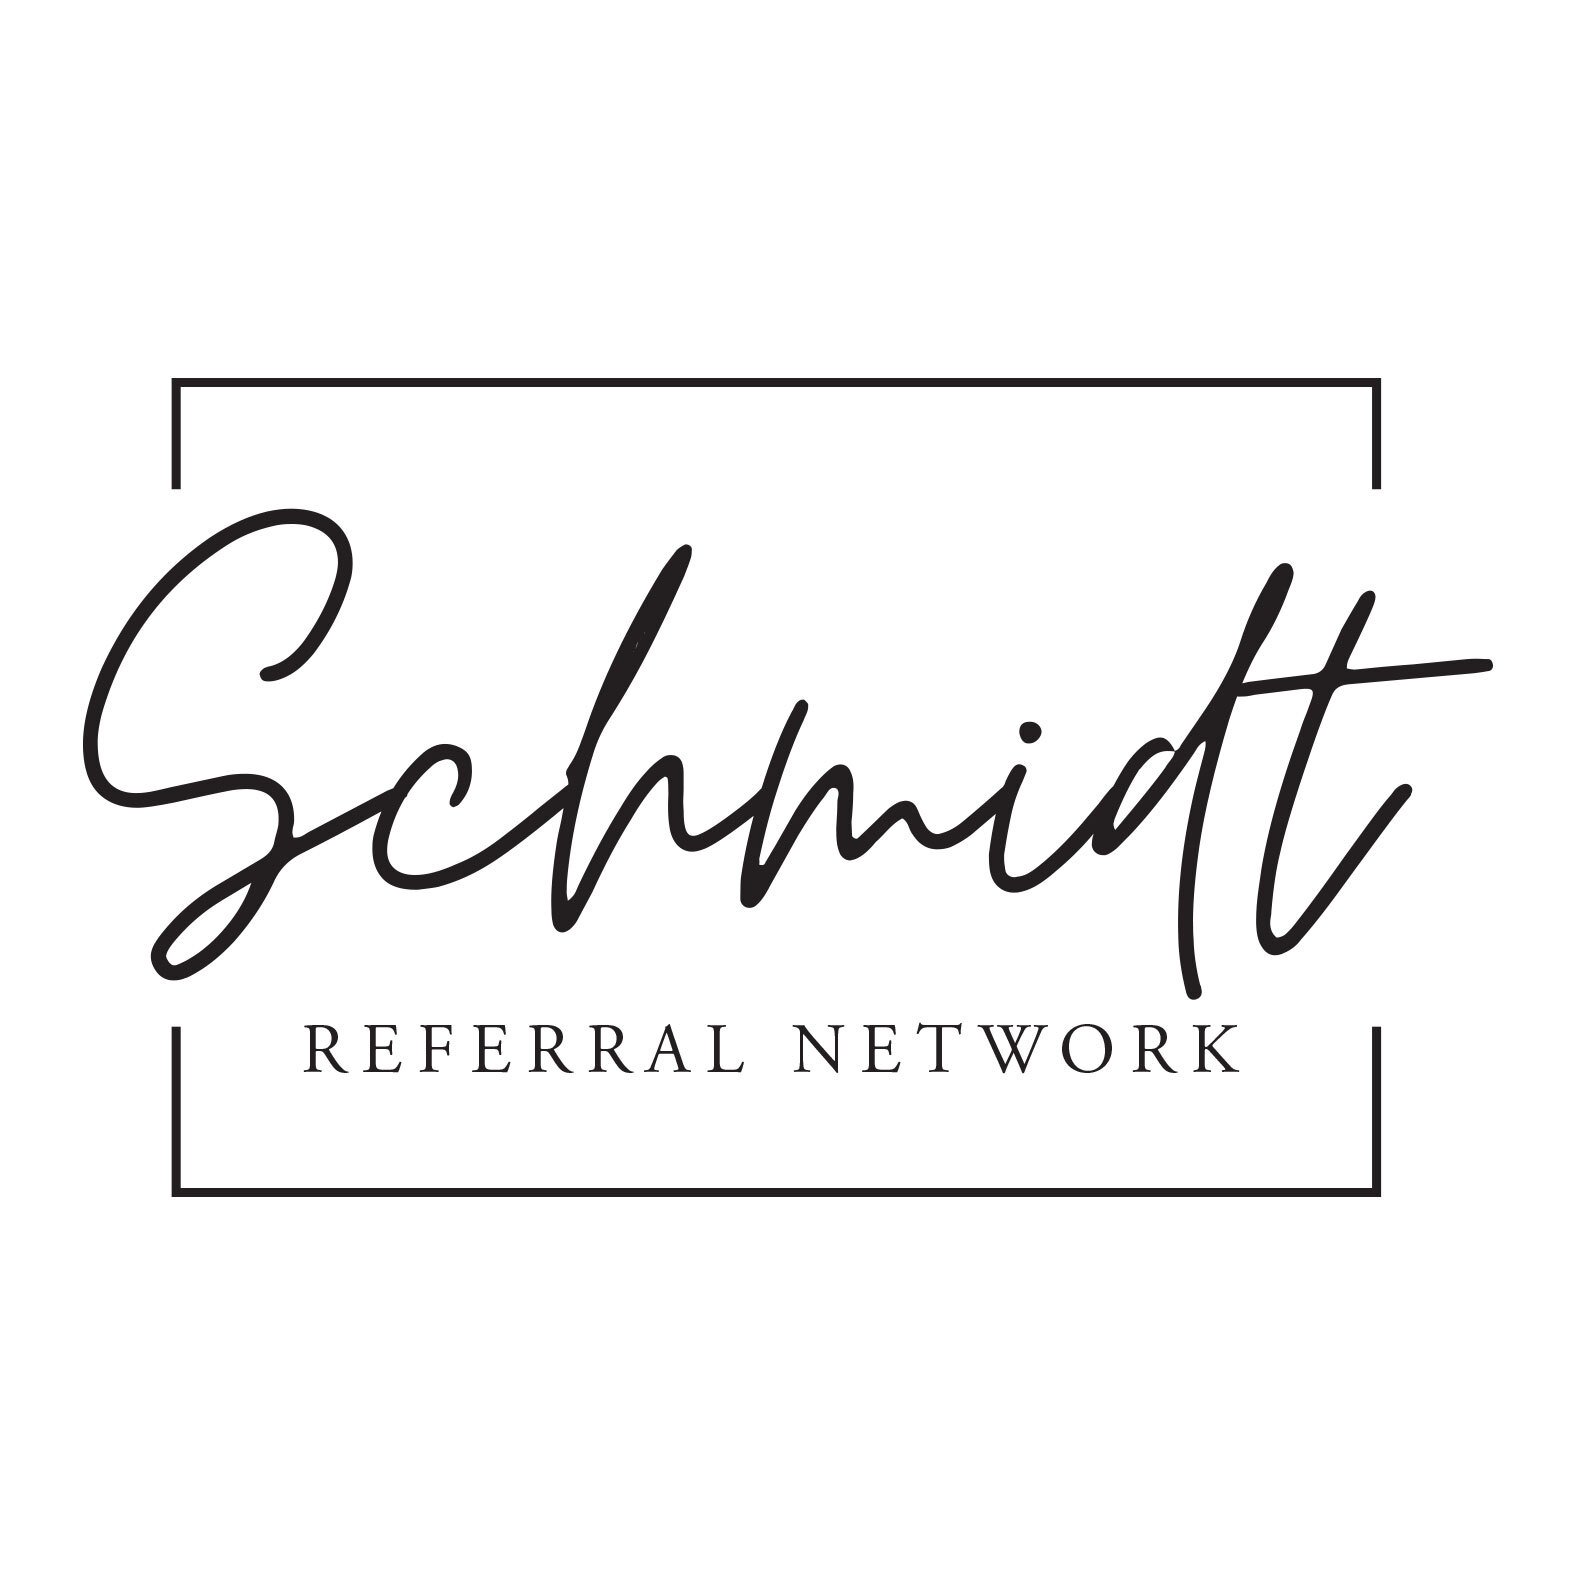 Schmidt Referral Network